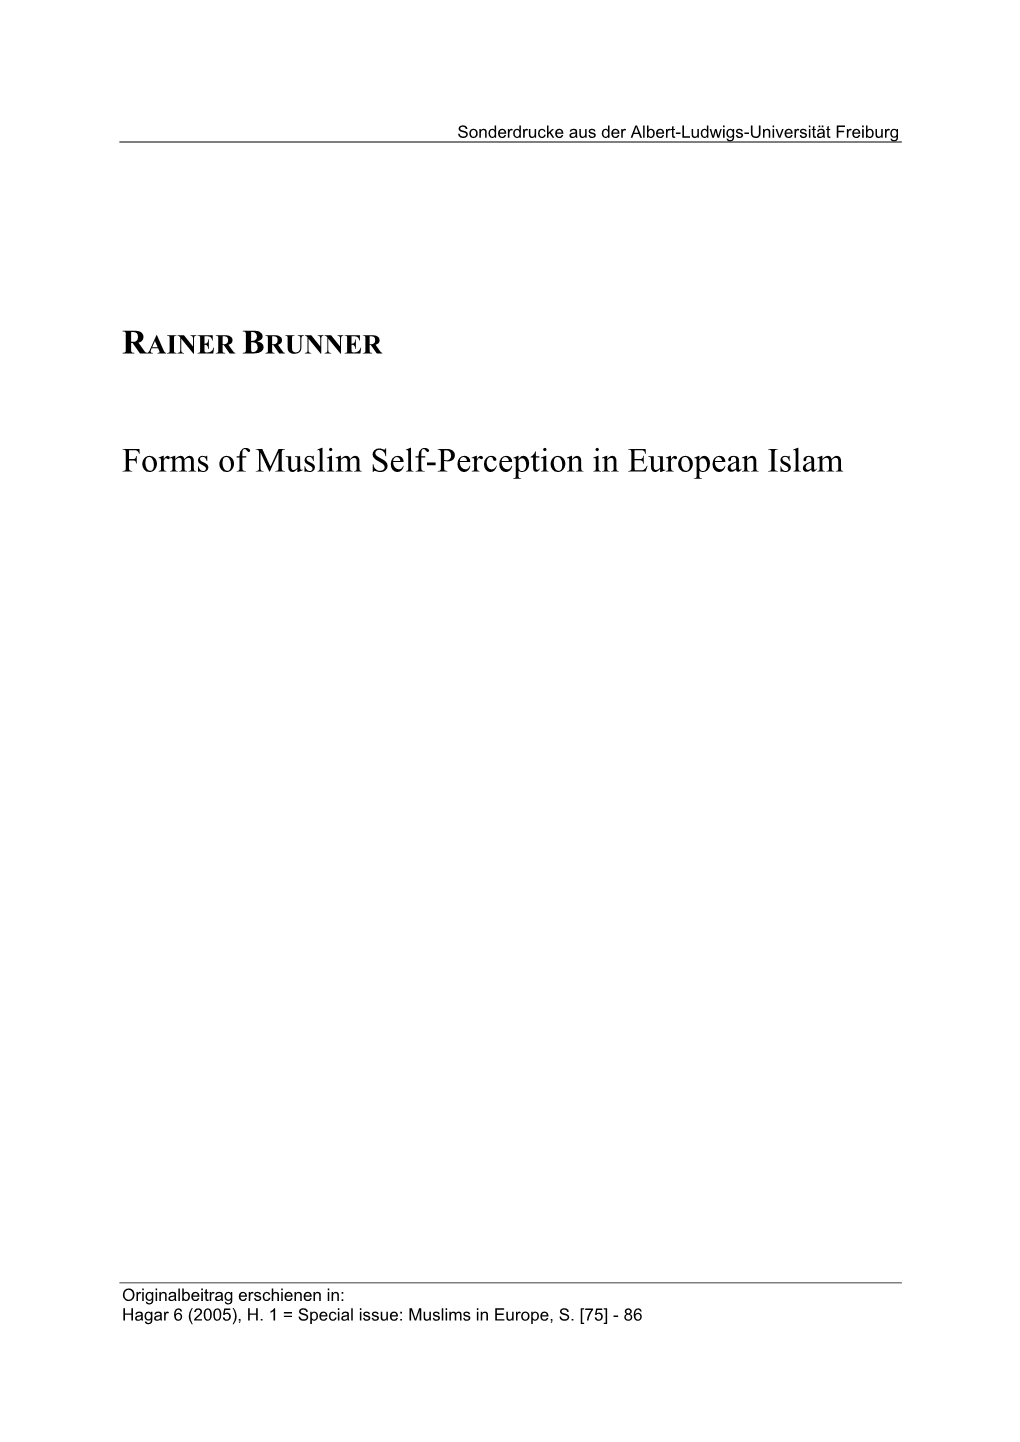 Forms of Muslim Self-Perception in European Islam